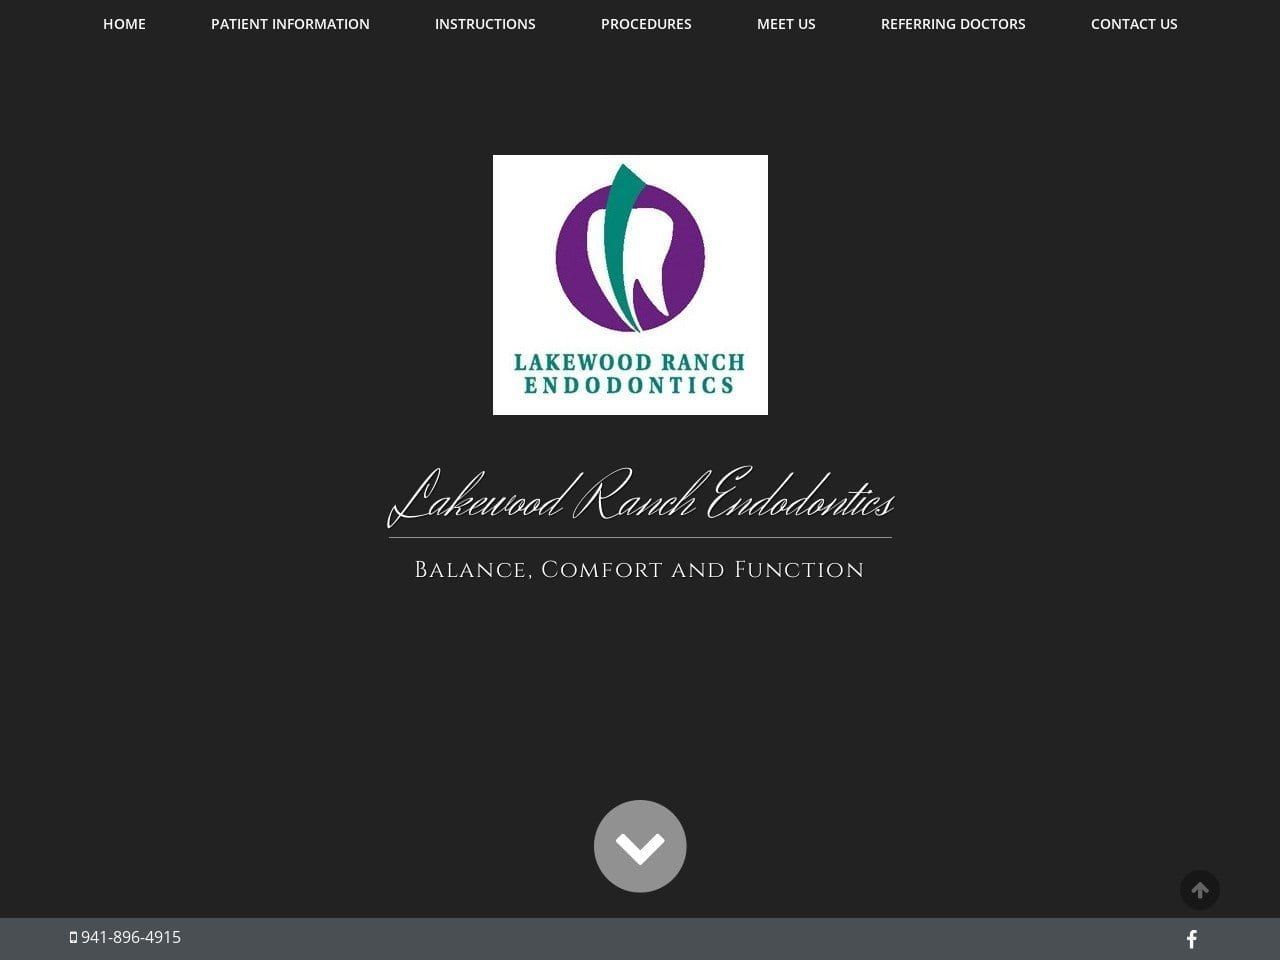 Lakewood Ranch Endodontics Website Screenshot from lakewoodranchendodontics.com